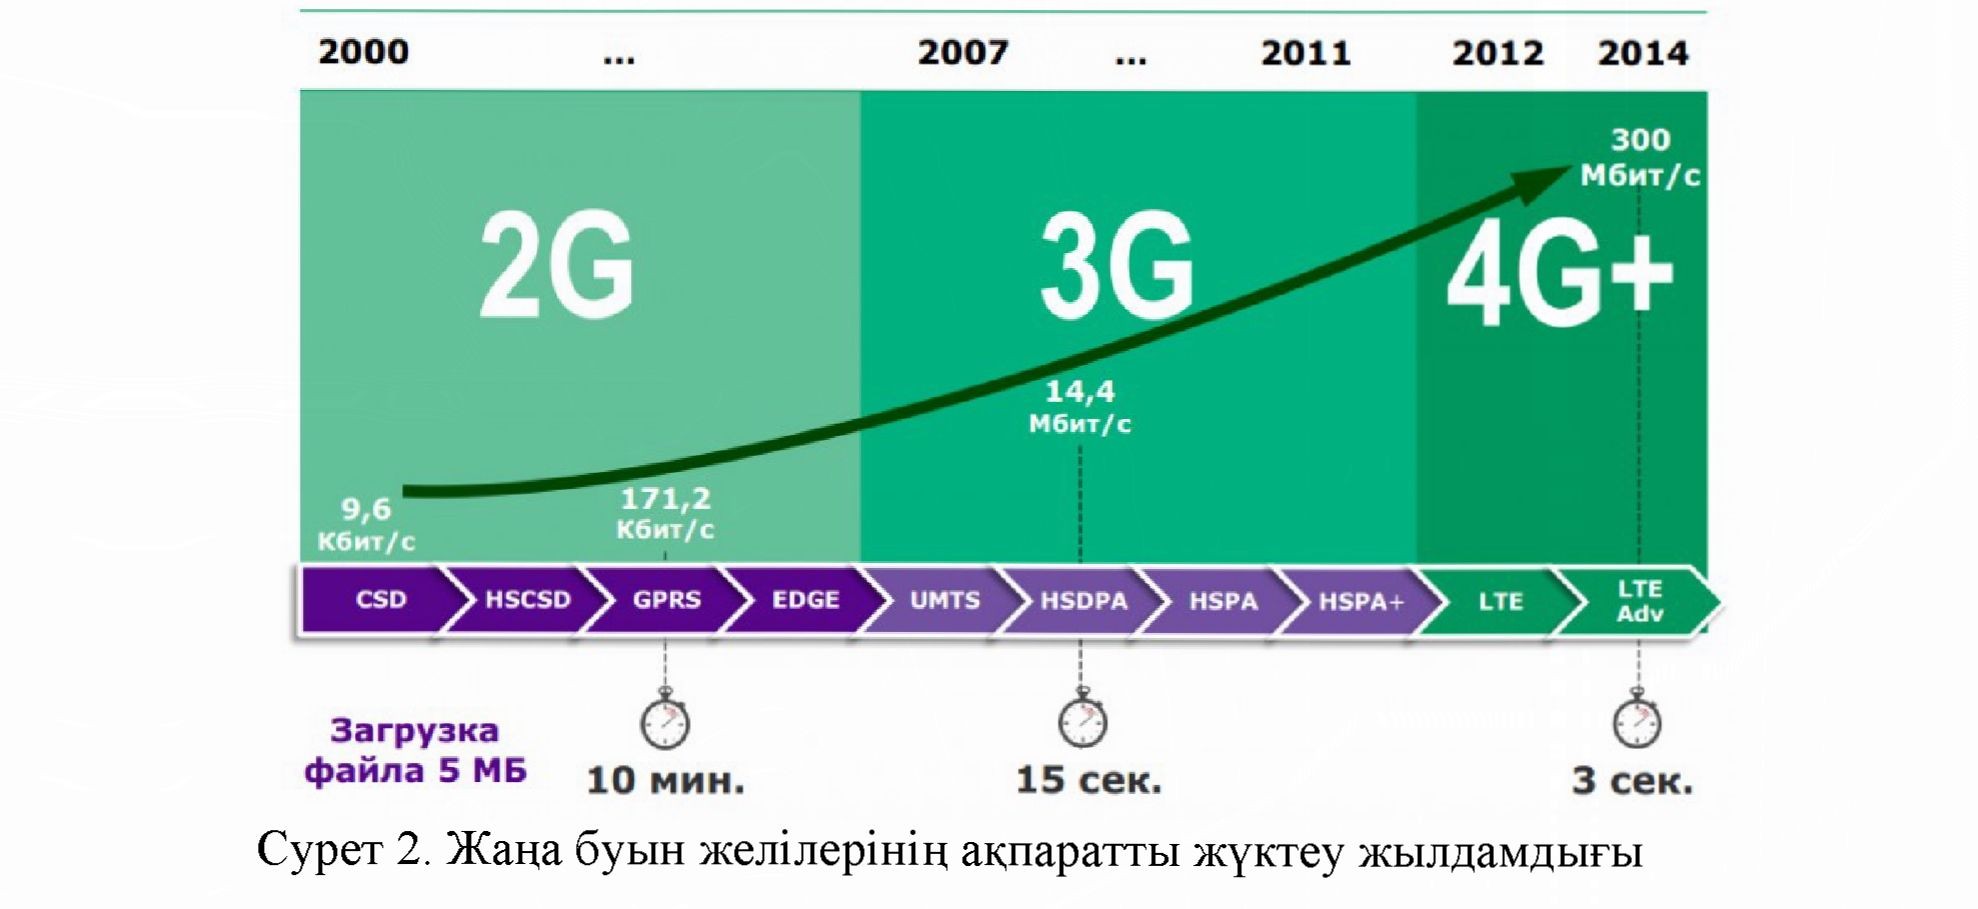 Pai 5g 4g. 2g, 3g, 4g LTE, 5g. Скорость передачи данных 2g 3g 4g. 4g LTE vs 4g Advanced. Технологии сотовой связи 2g 3g 4g.